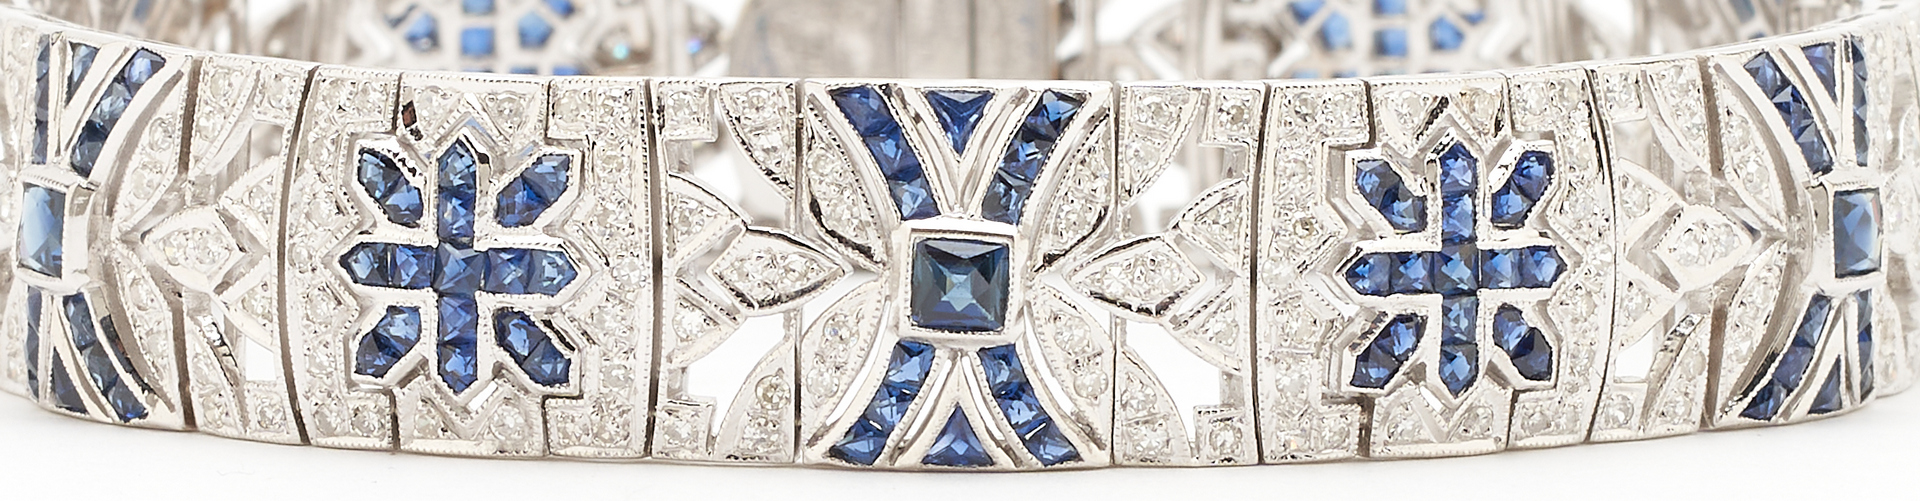 Lot 44: 14K Art Deco Diamond & Sapphire Bracelet